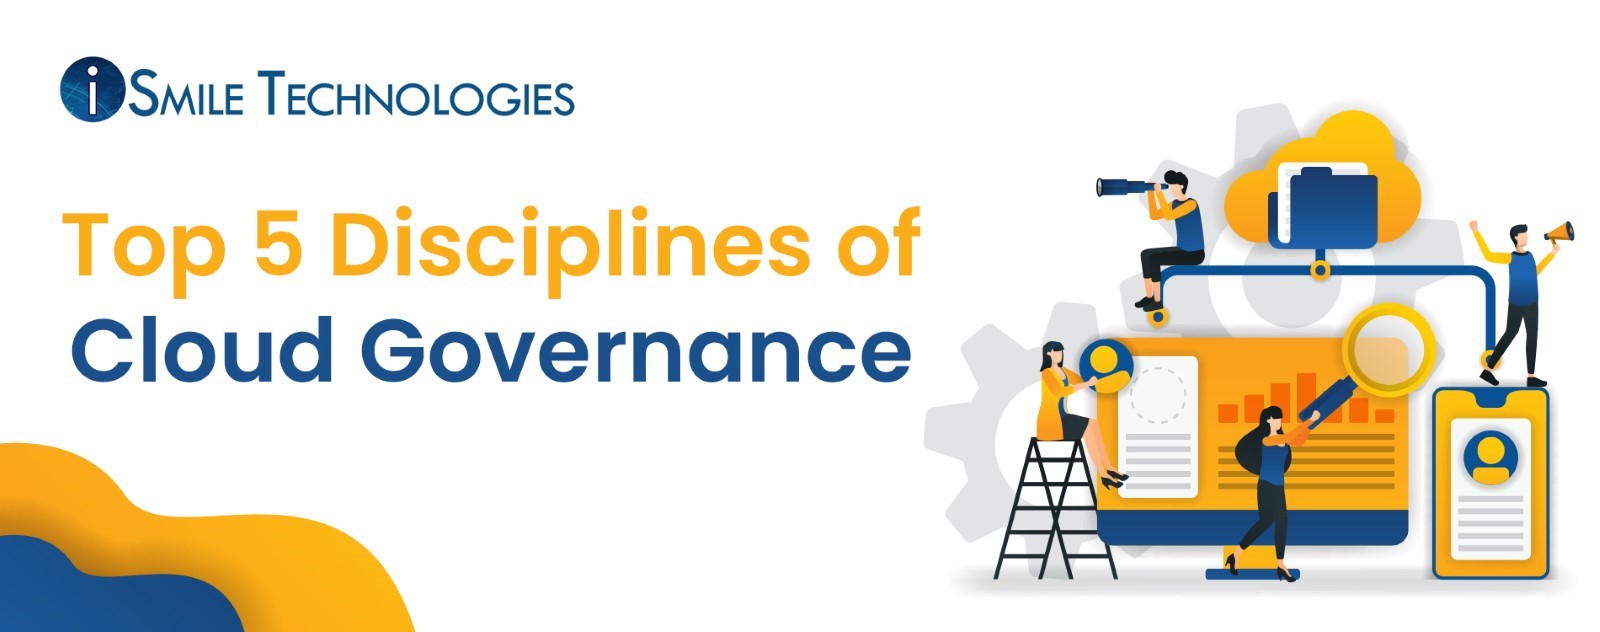 Top 5 Disciplines of Cloud Governance